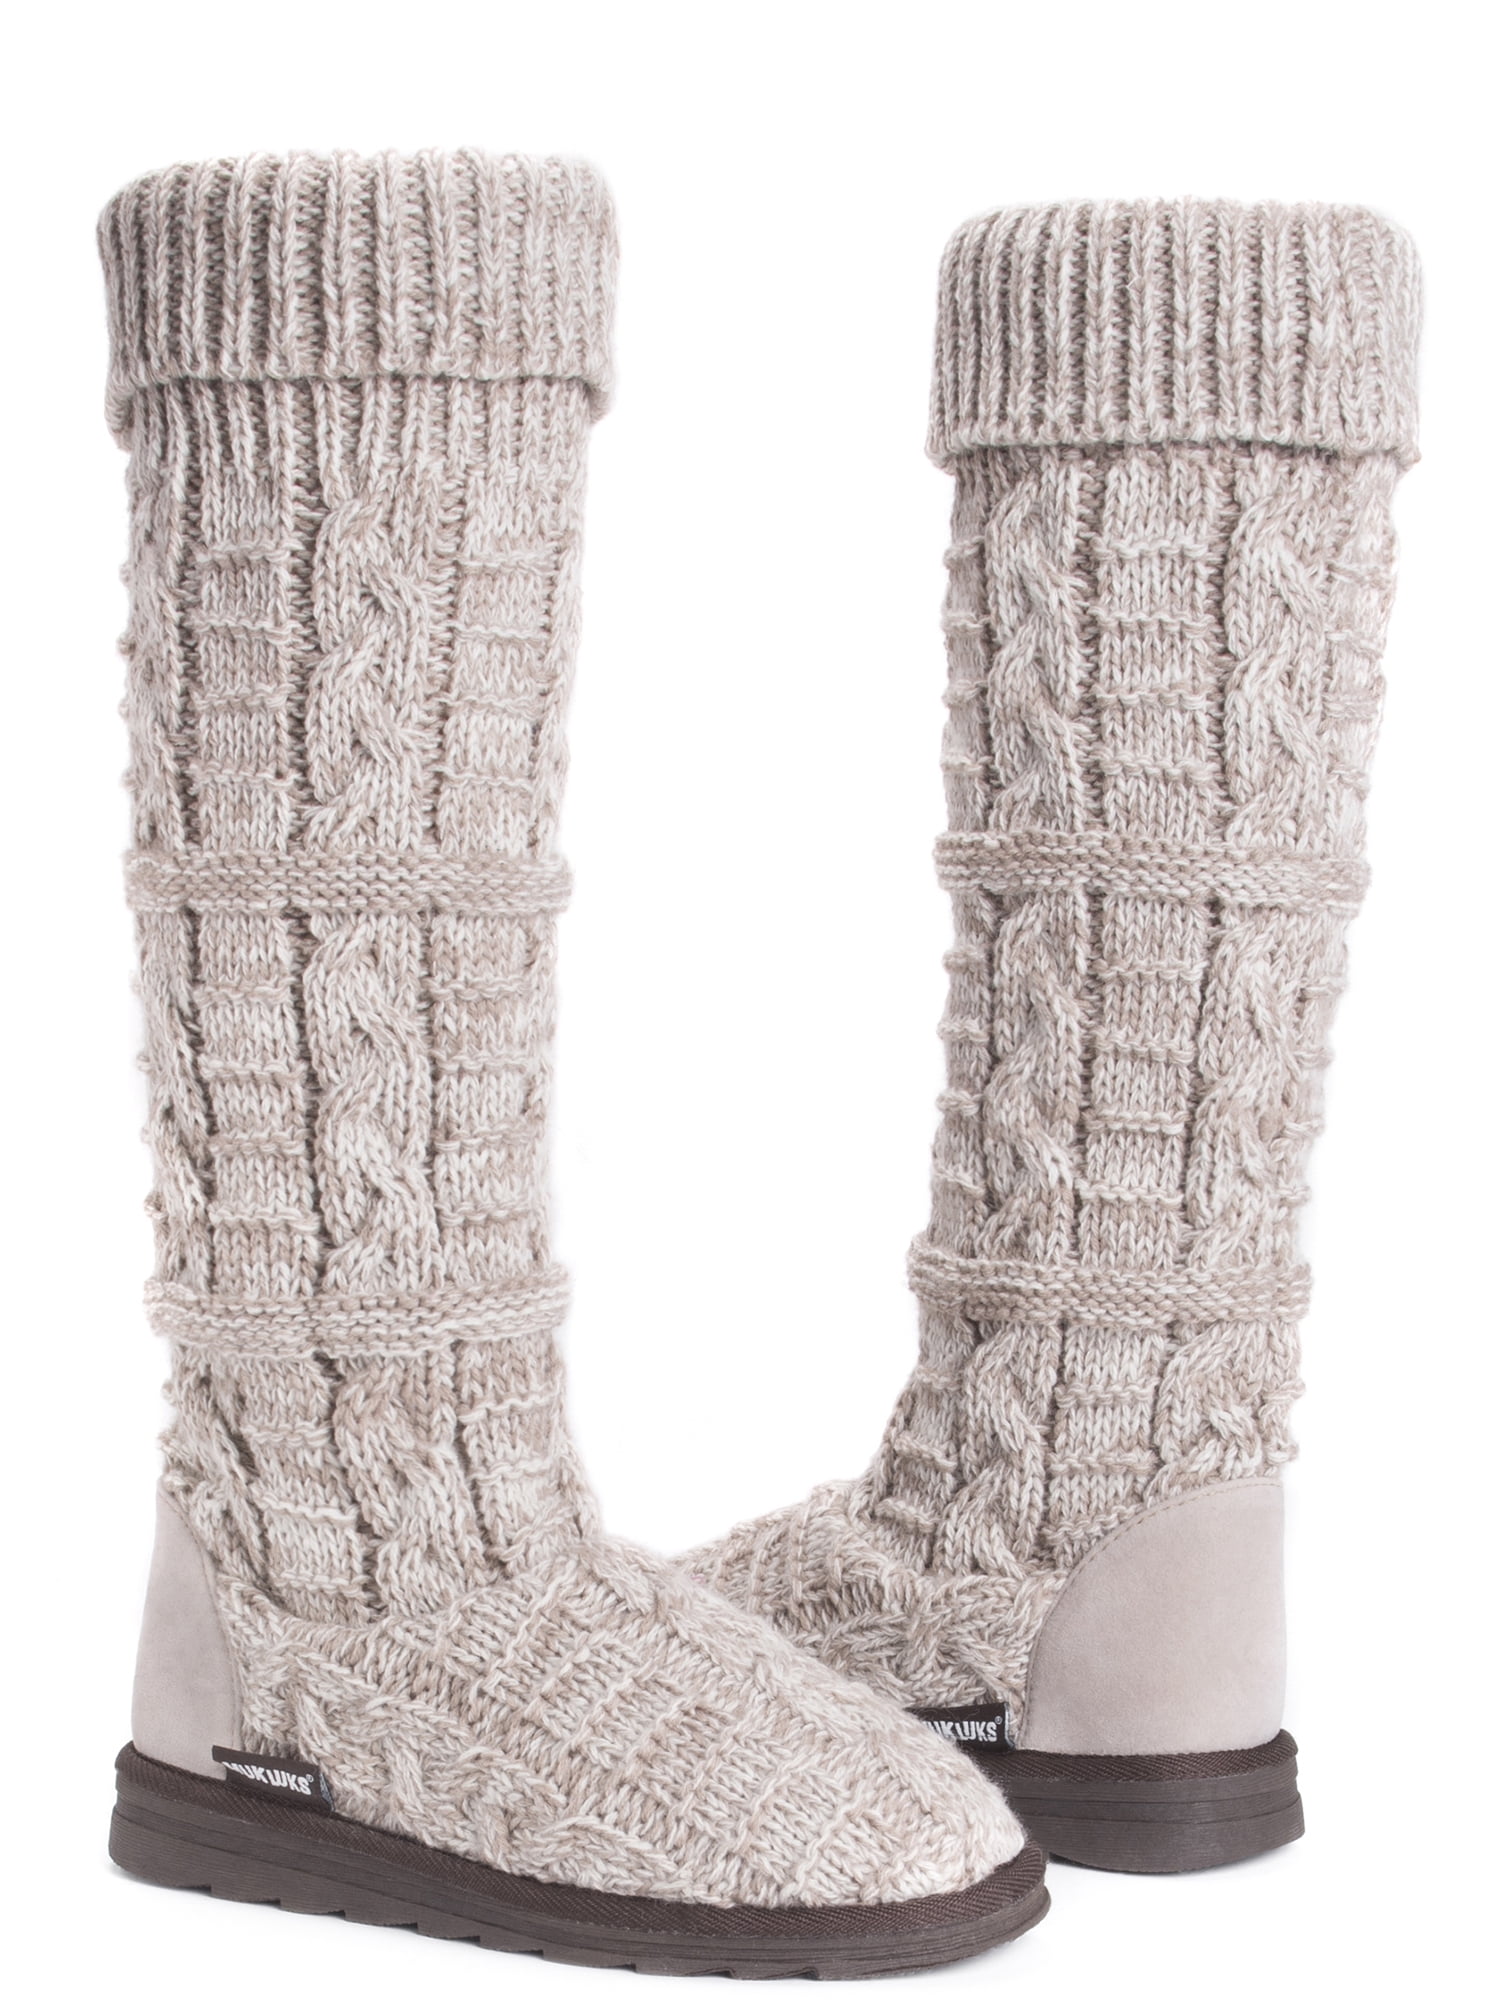 Muk Luks Shelly Marl Knit Sweater Slouch Boot (Women's)